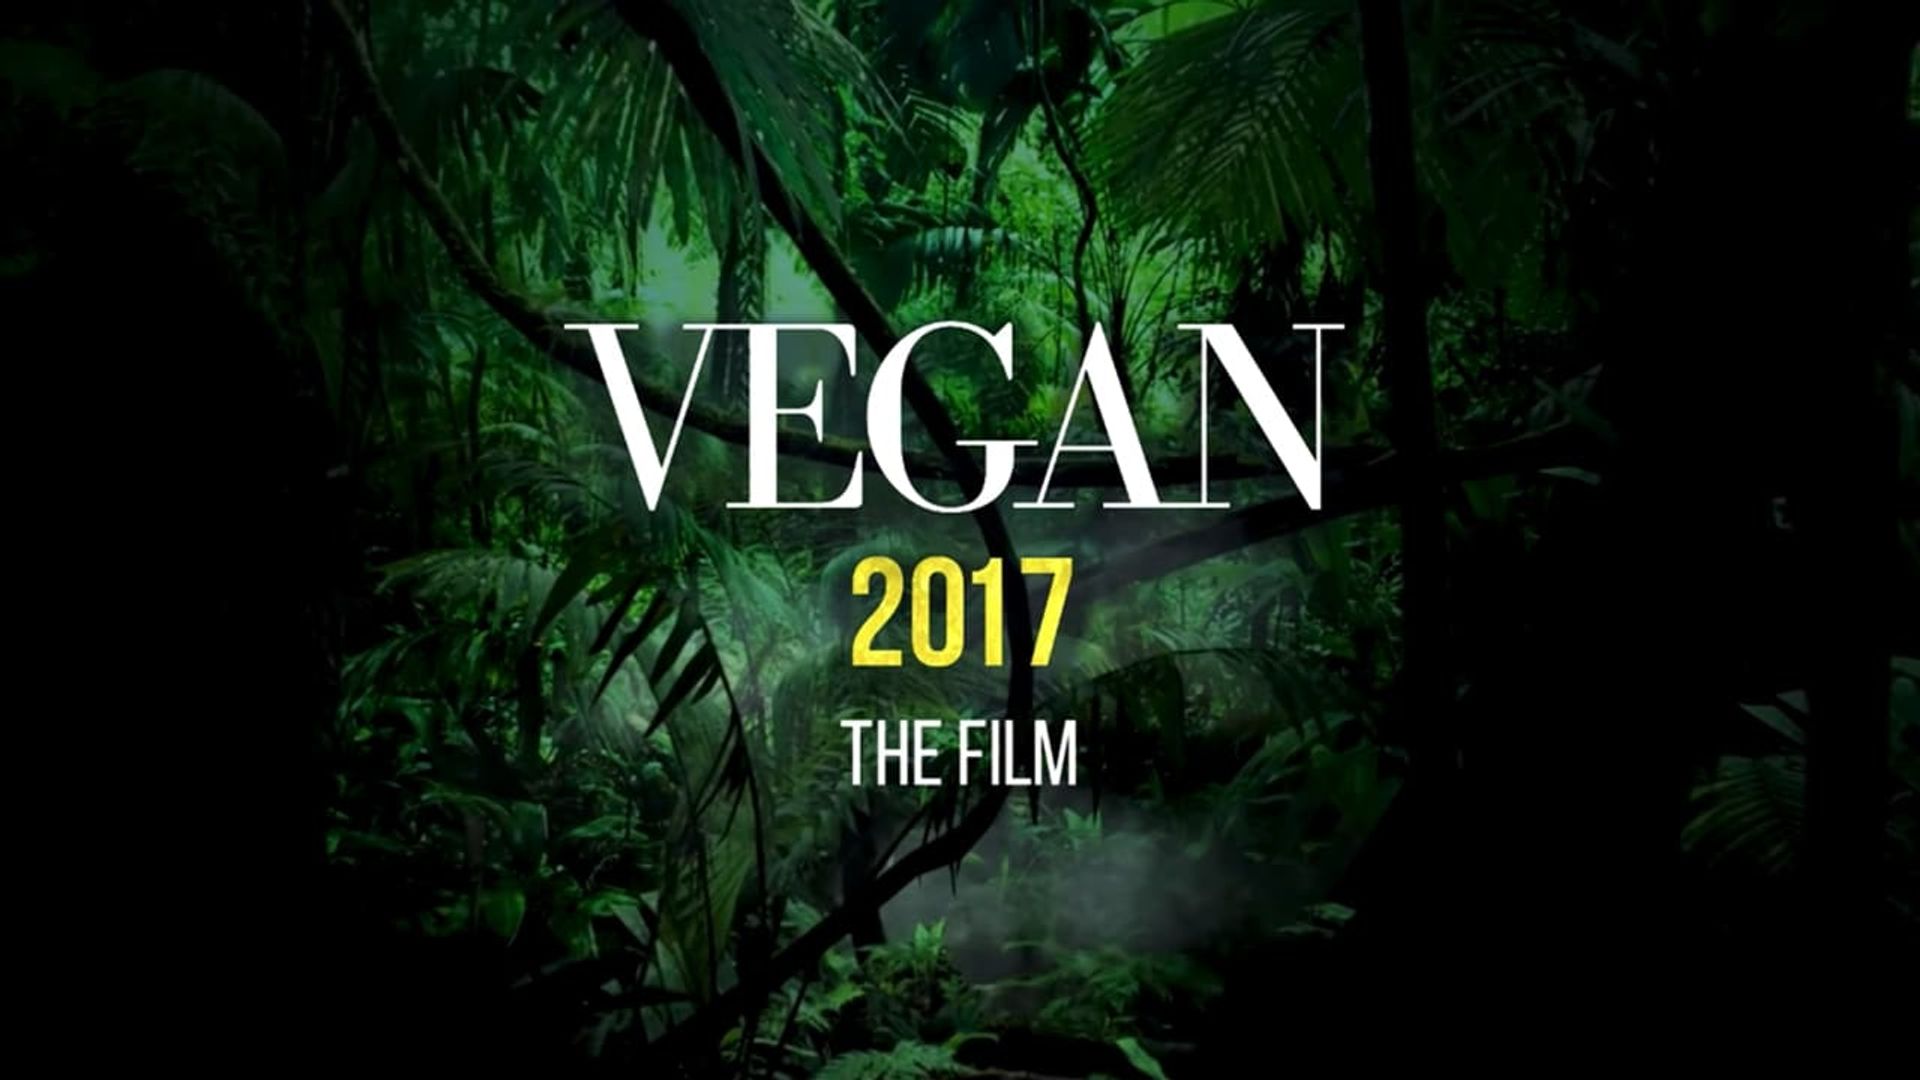 Vegan 2017 background